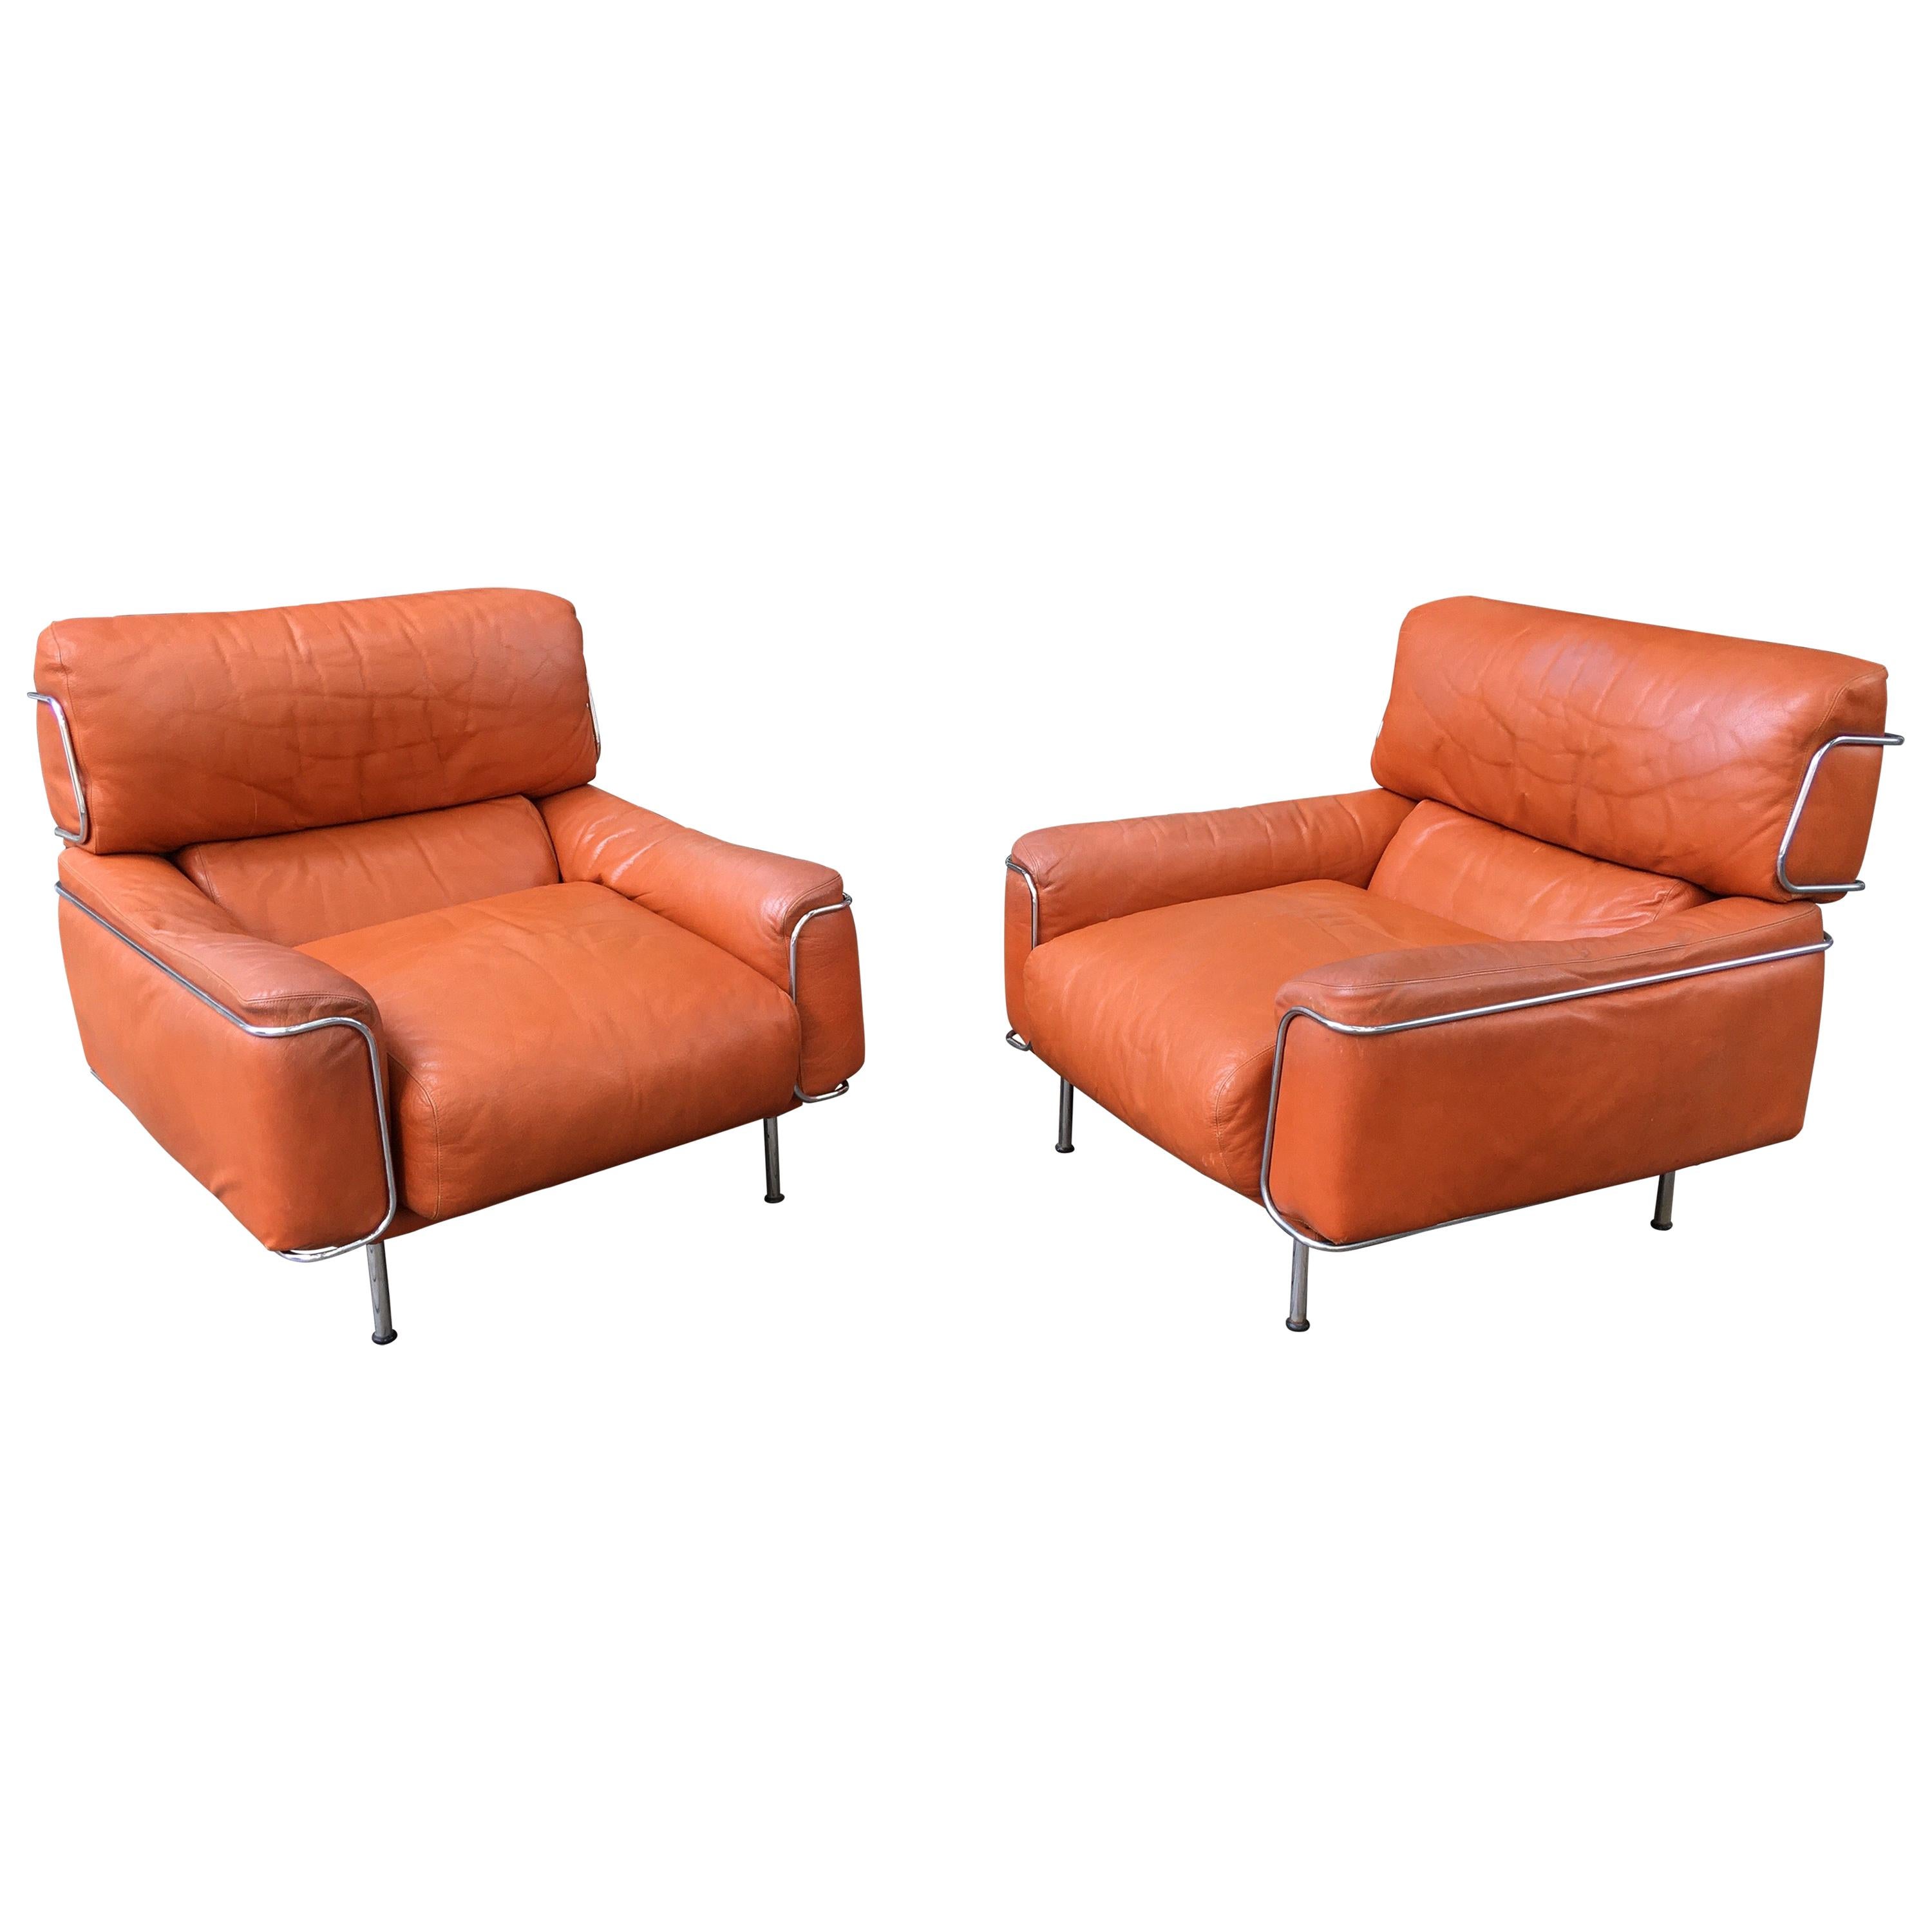 Saporiti Leather and Chrome Lounge Chairs